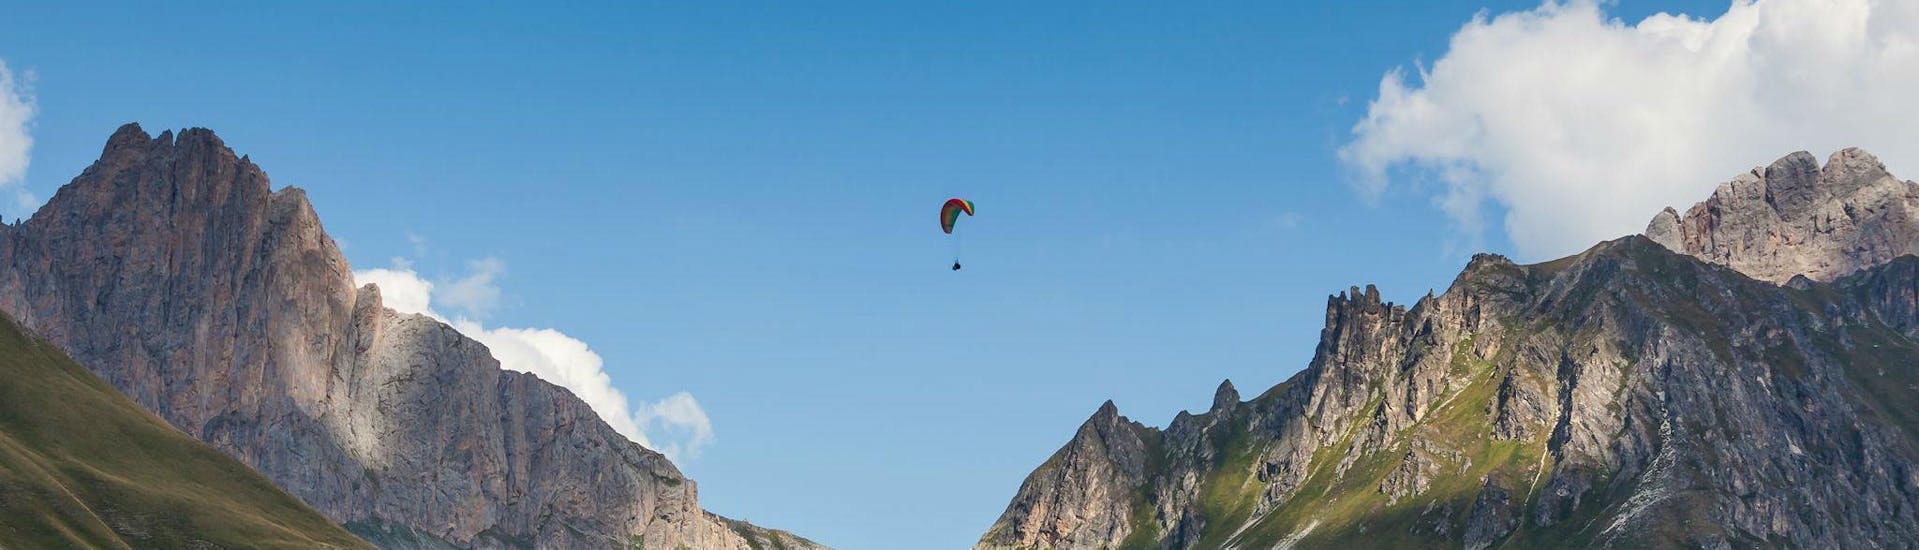 Thermisch tandem paragliding in Serre-Chevalier - Chantemerle (vanaf 7 j.) - Col du Granon.